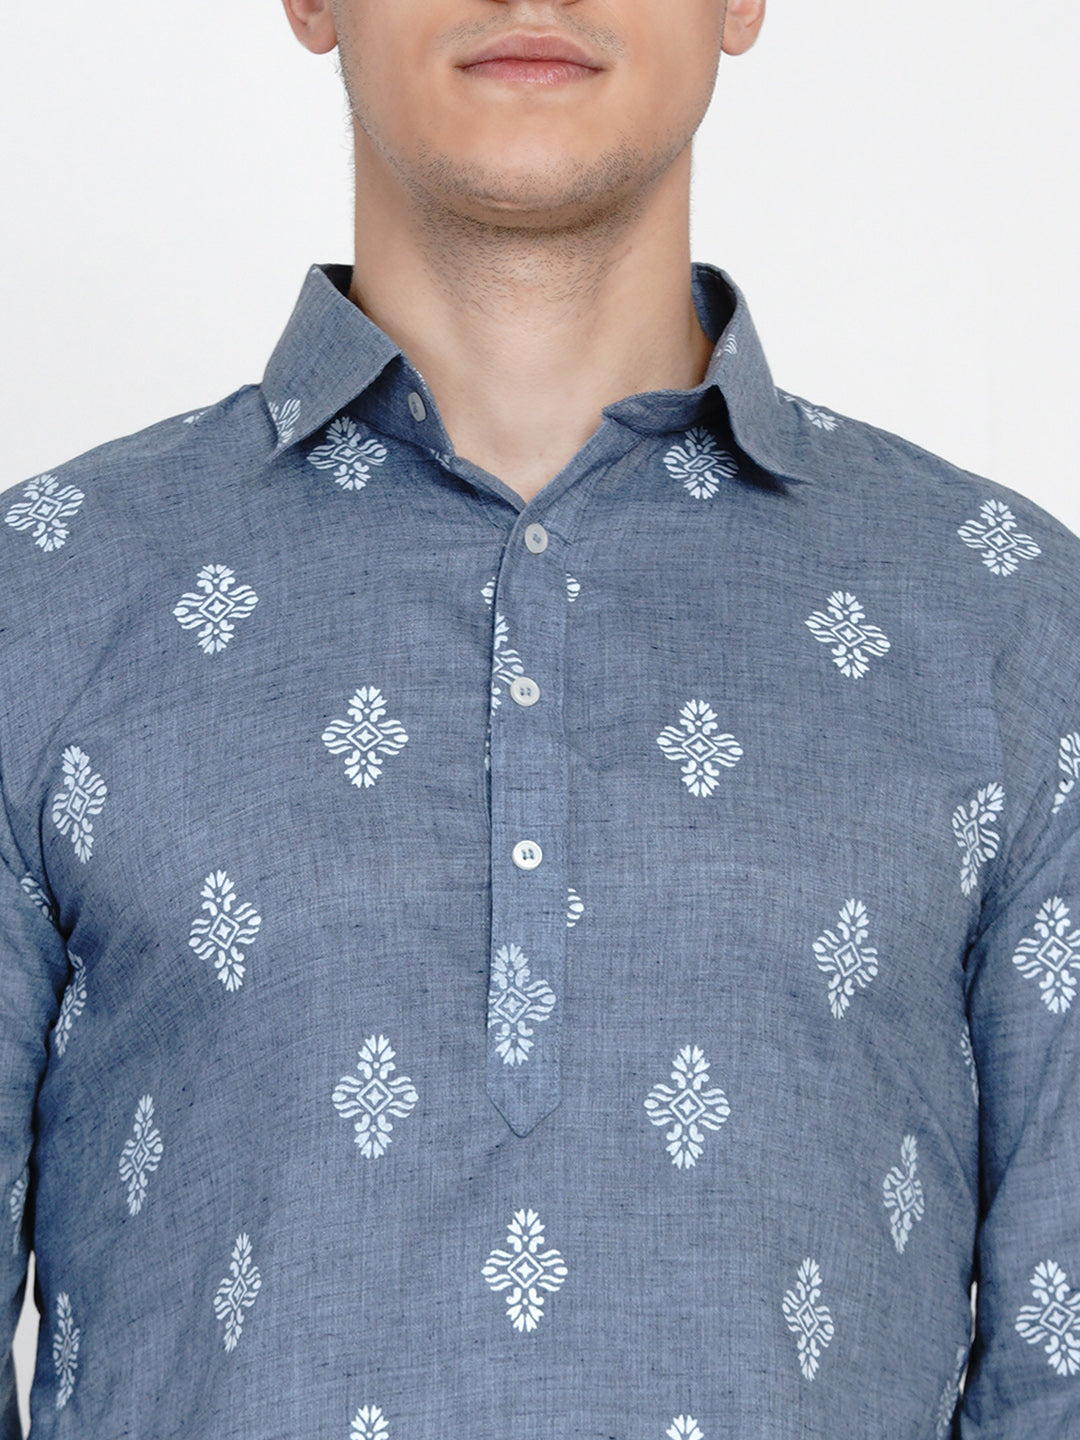 Men Blue Embroidered Pure Cotton Kurti with Pyjamas